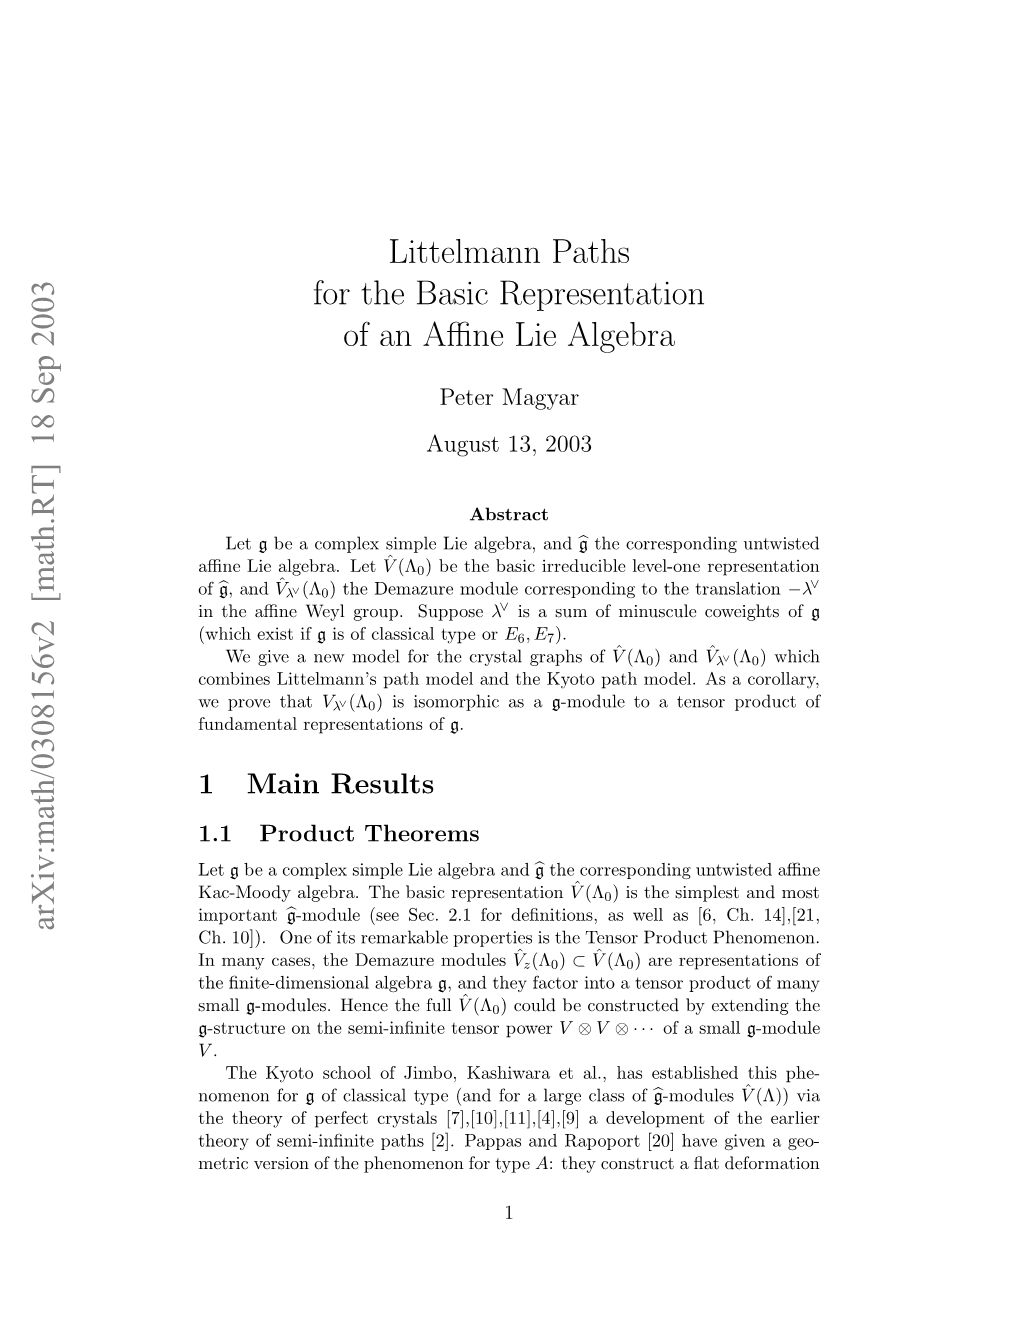 Littelmann Paths for the Basic Representation of an Affine Lie